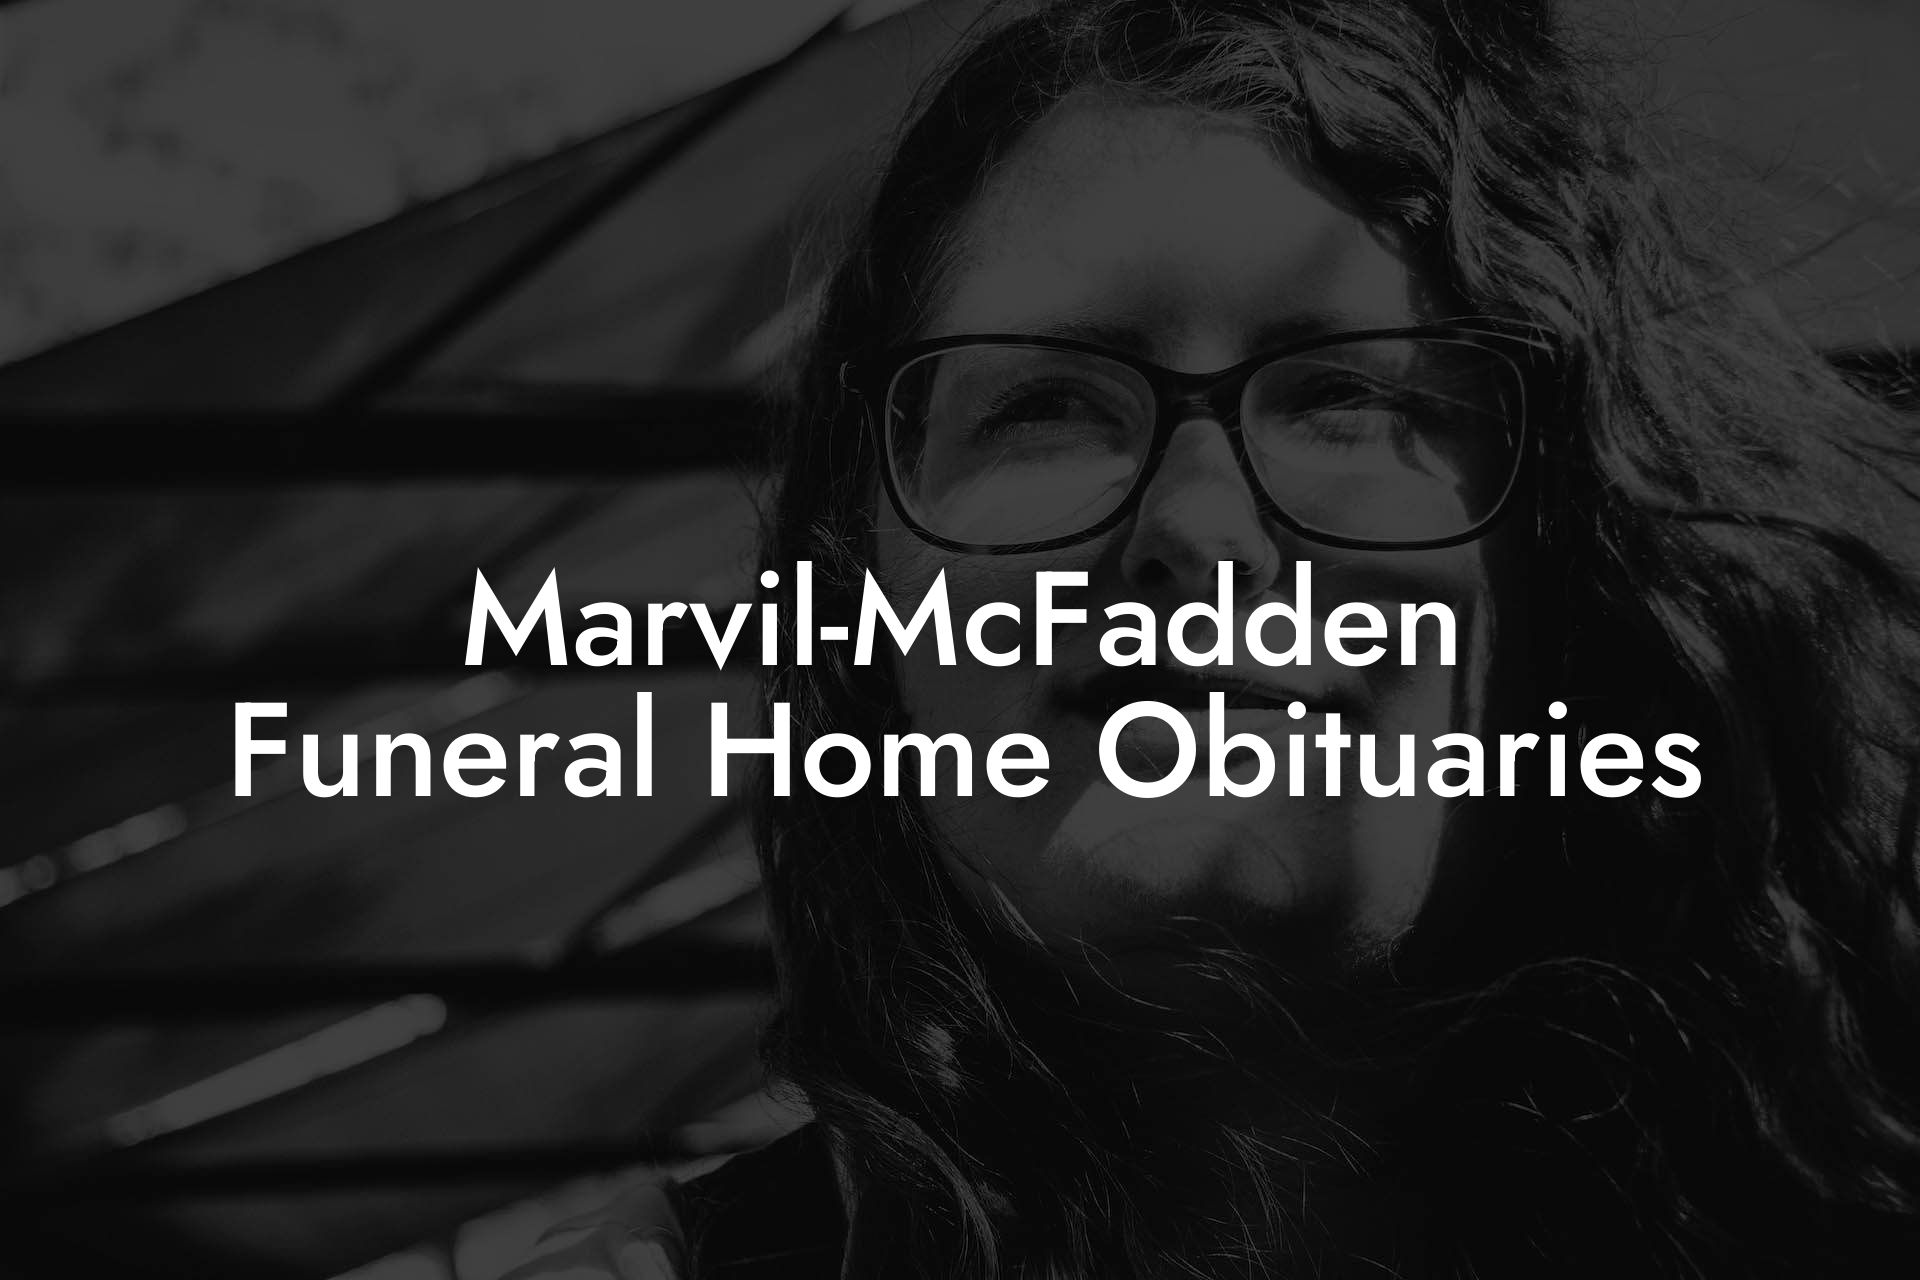 Marvil-McFadden Funeral Home Obituaries